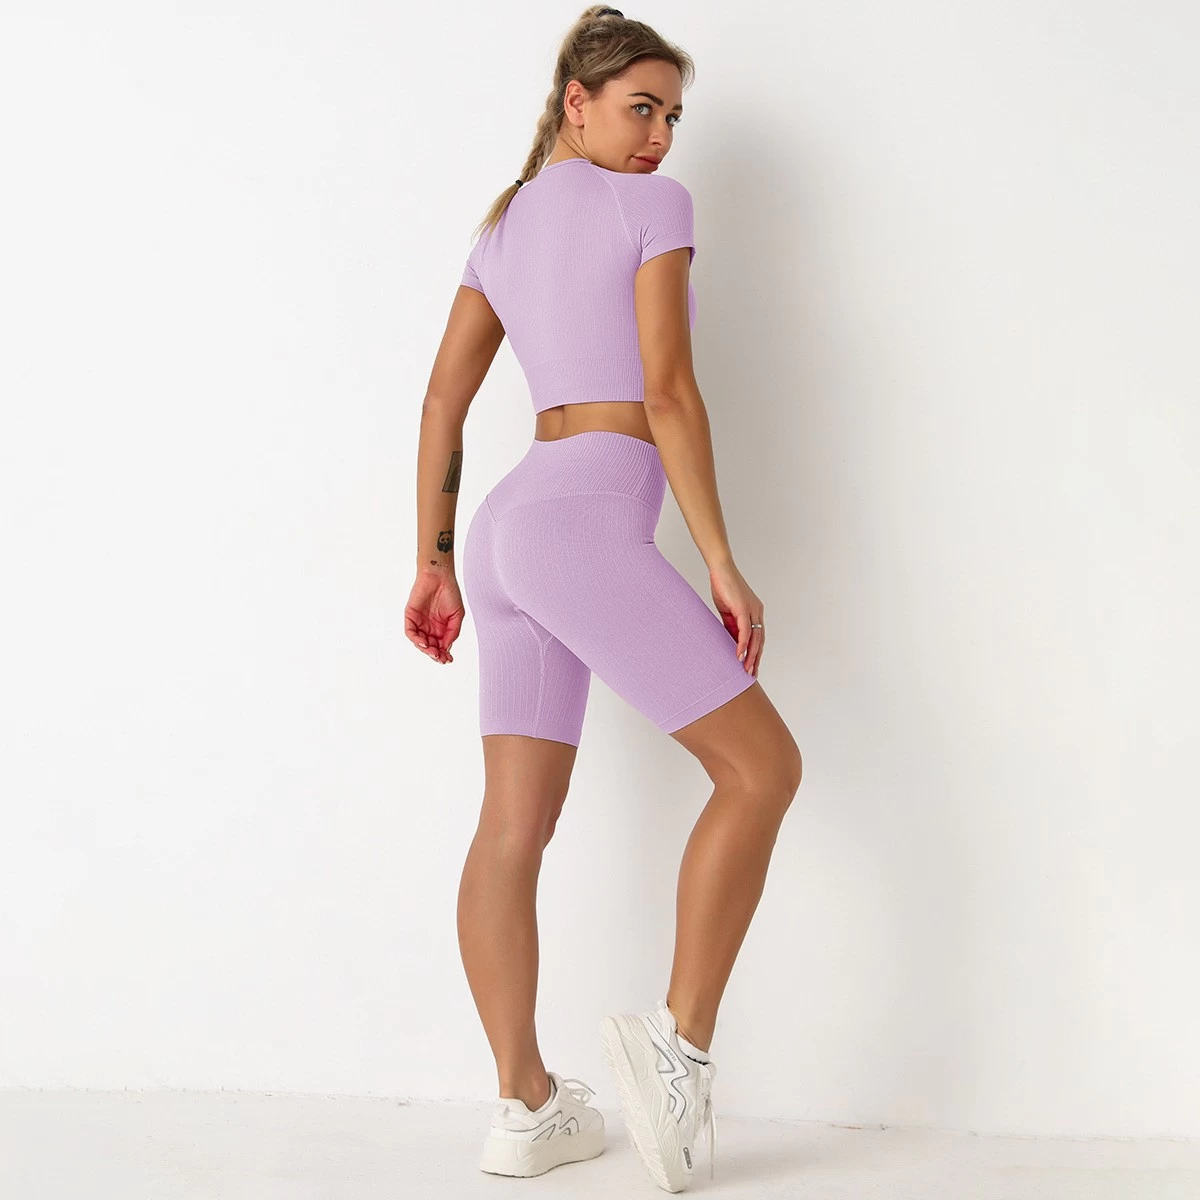 Yoga sports shorts supplier